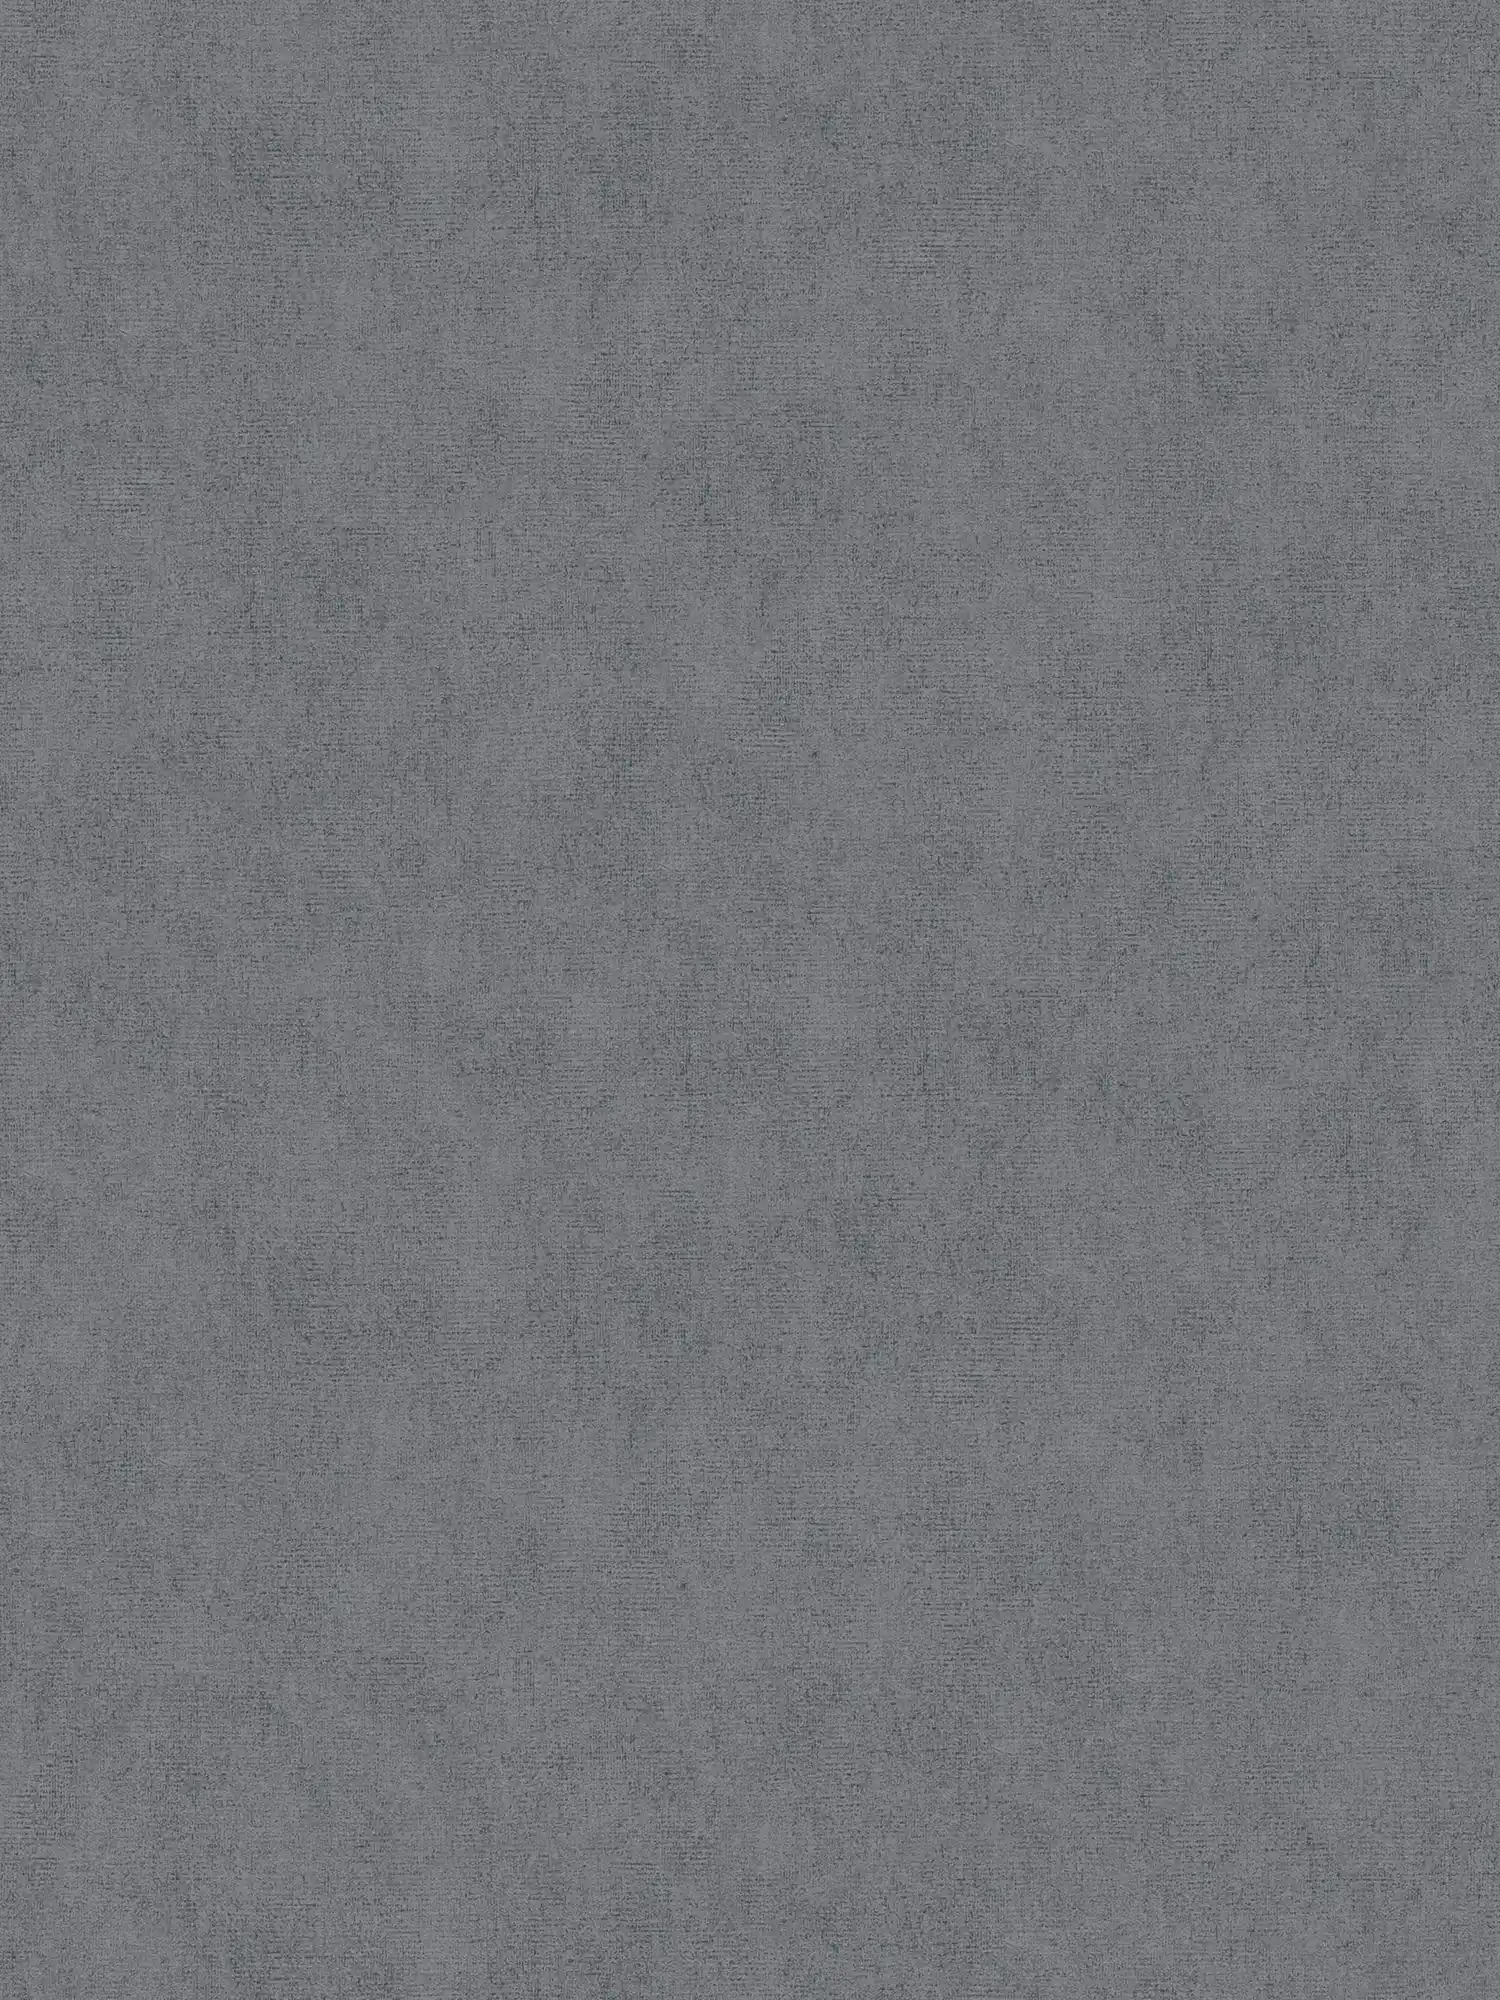 Plain wallpaper dark grey mottled with shimmer effect - grey
